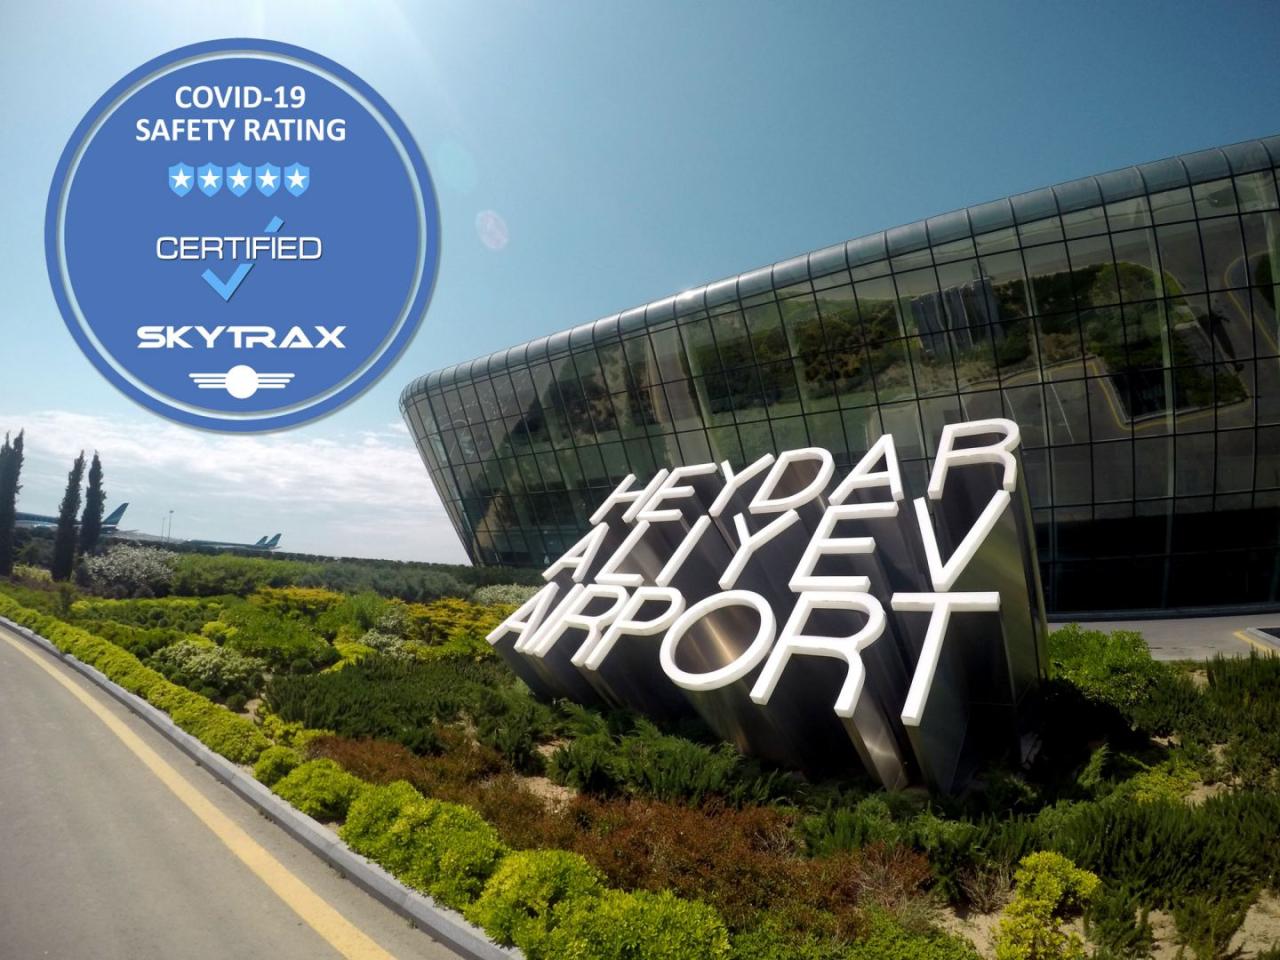 Baku Heydar Aliyev Airport gains 5-Star COVID-19 Airport Safety Rating